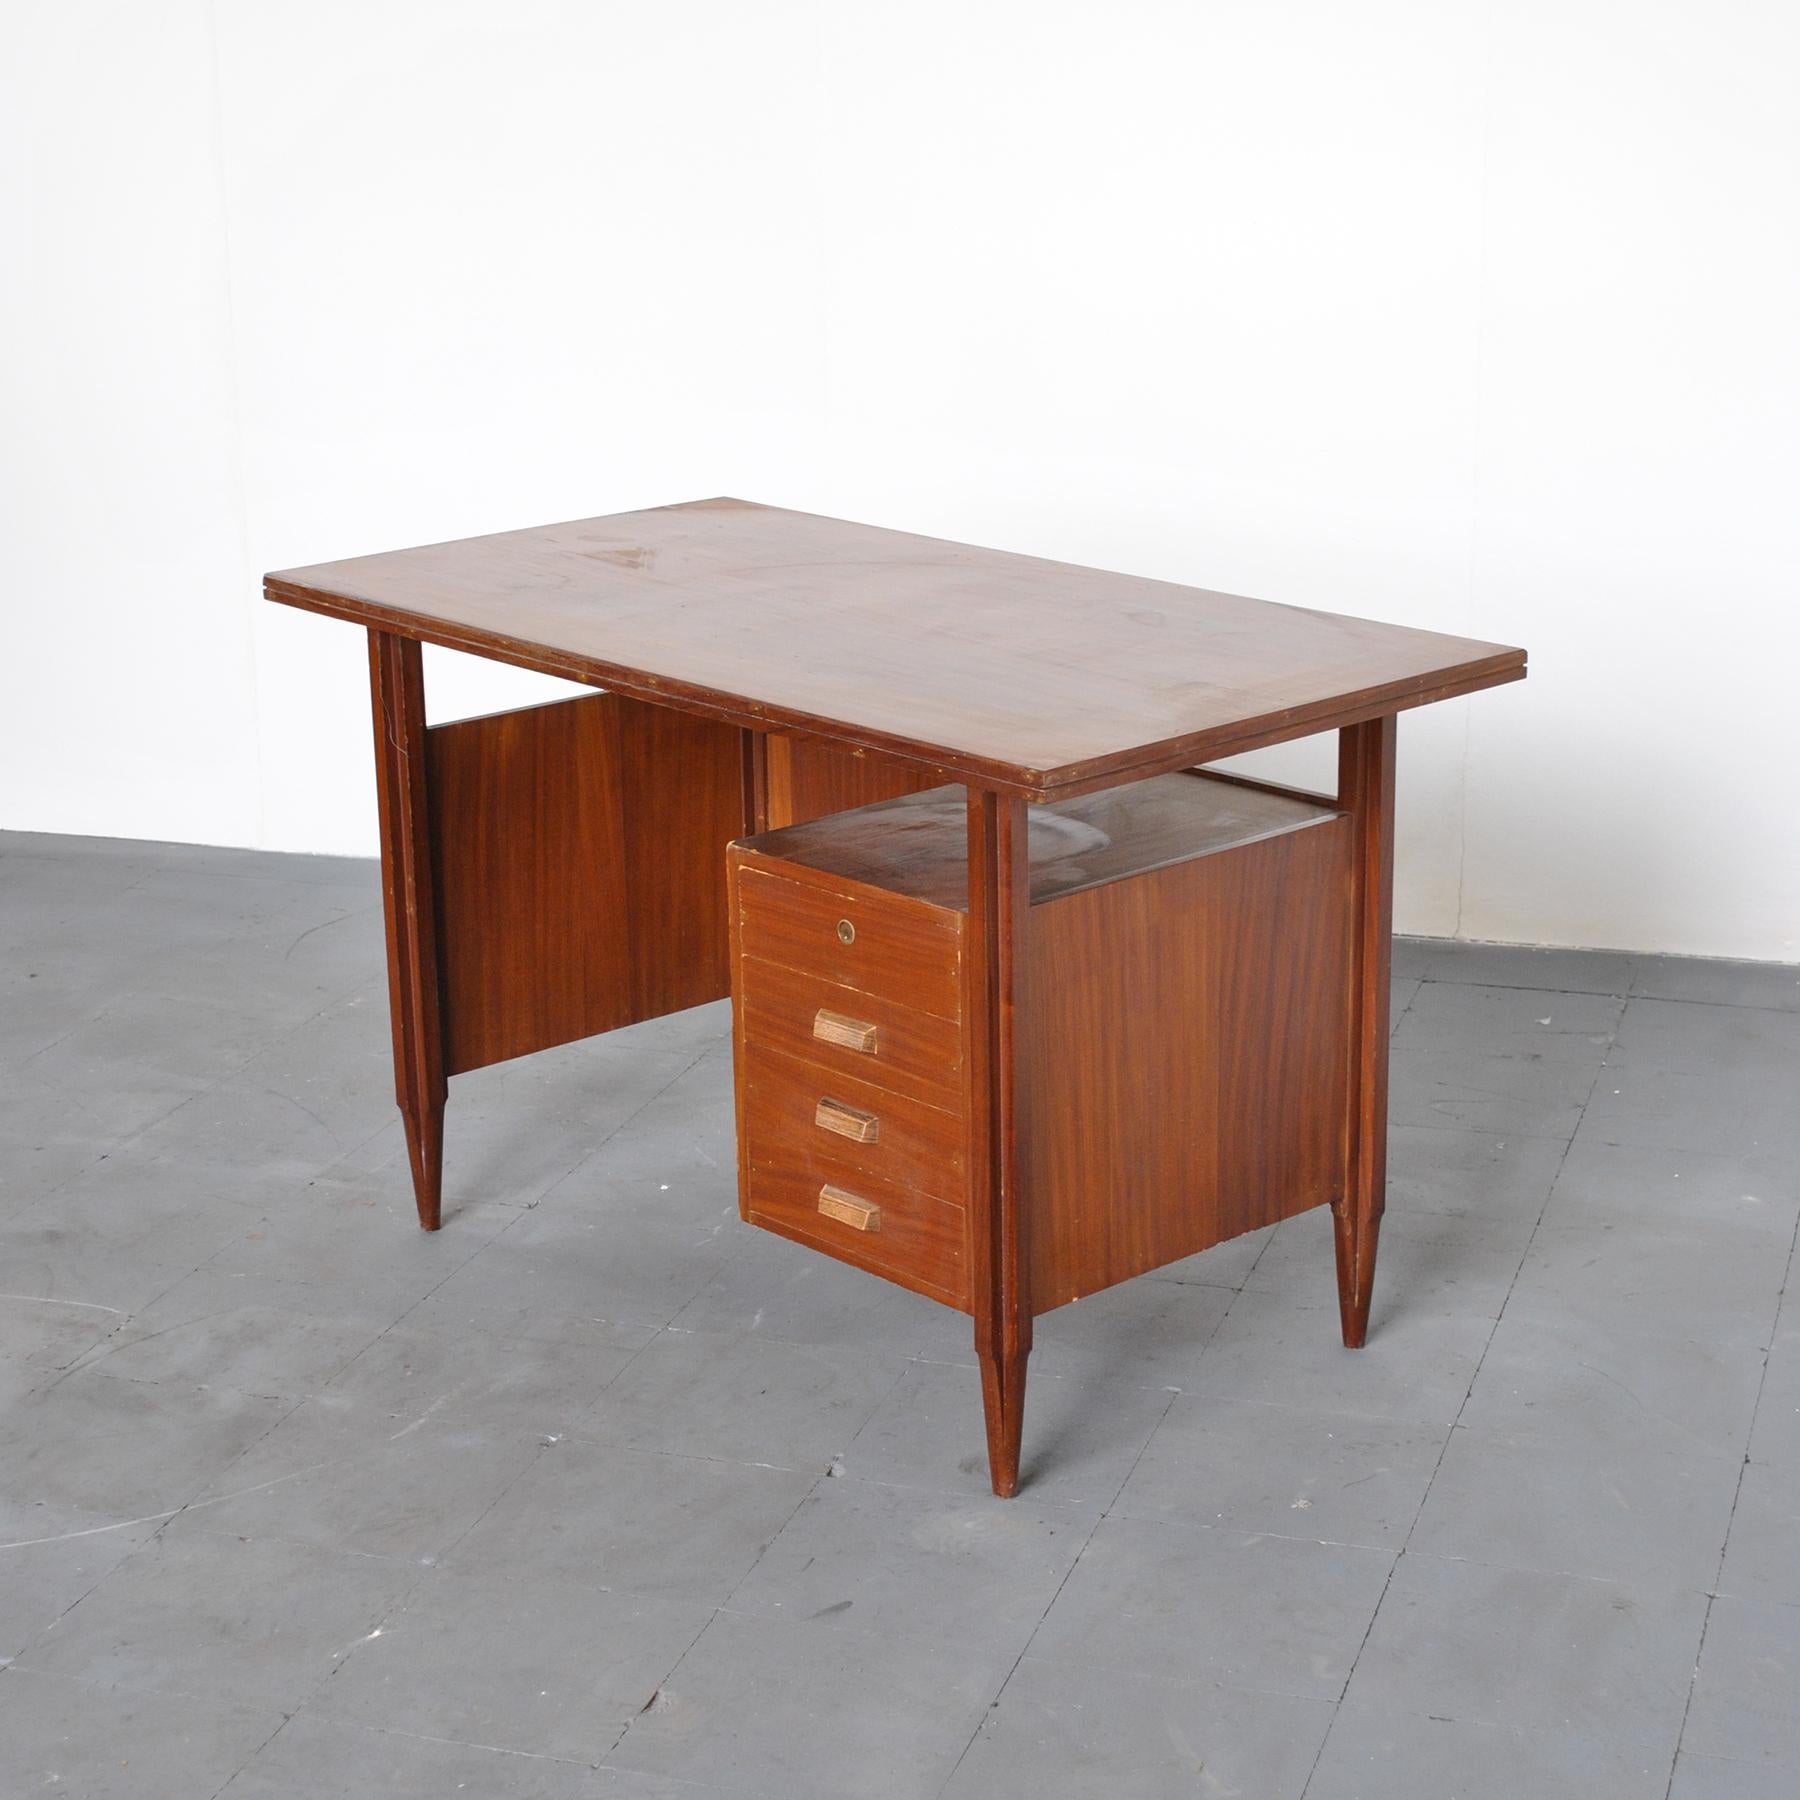 60s style desk